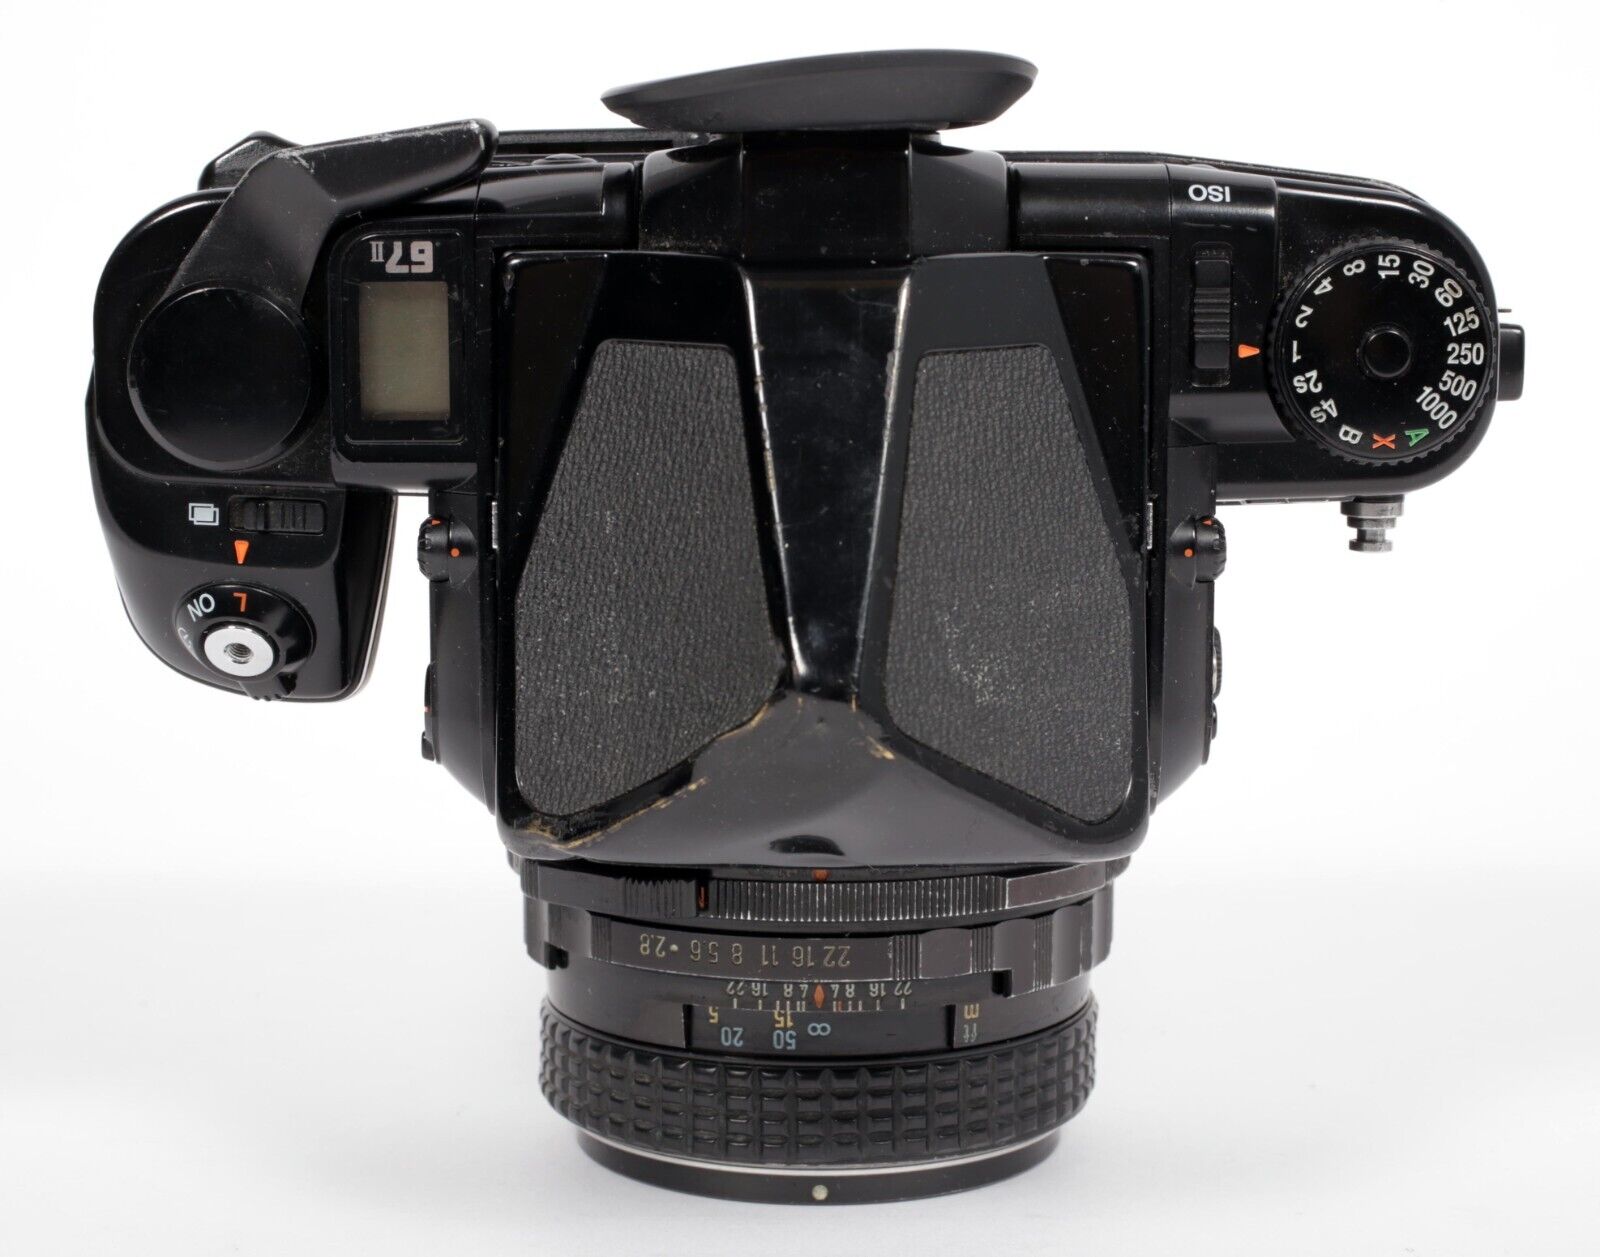 Pentax 67 II 6X7 camera with SMC 90mm F2.8 lens